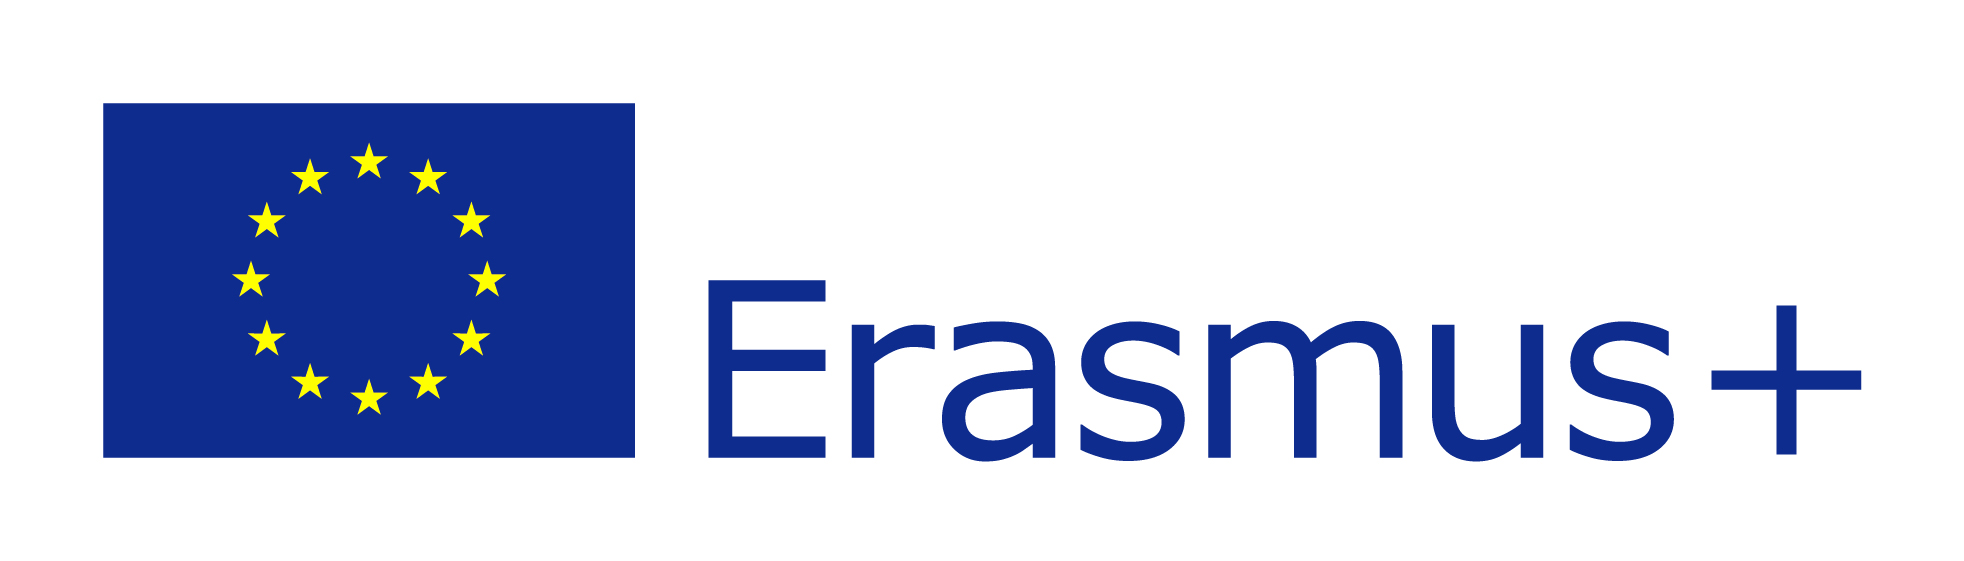 EU flag-Erasmus vect POS